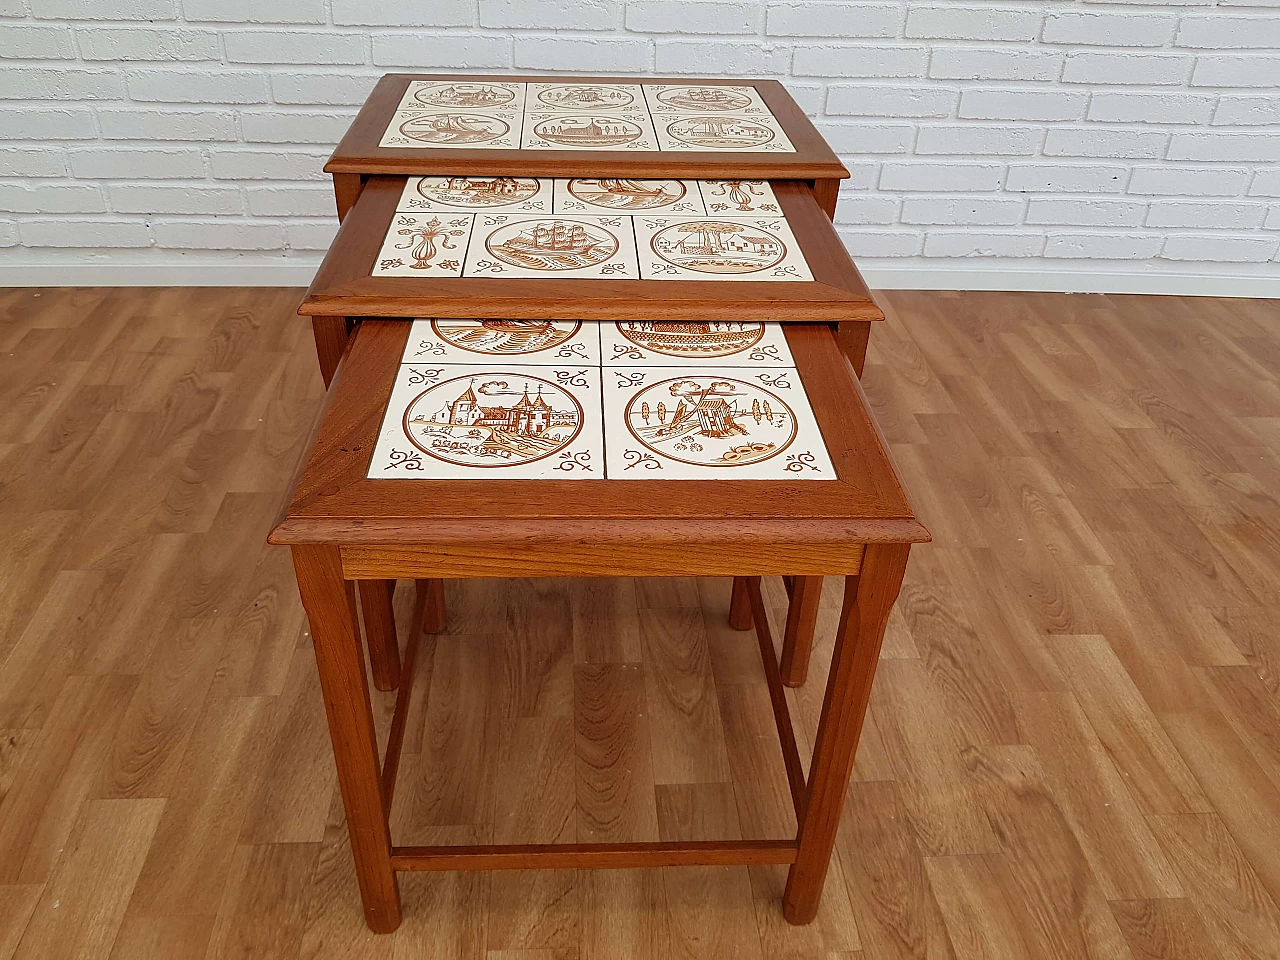 Nesting table, 60s, danish design, hand-painted ceramic tiles, teak wood 1064956